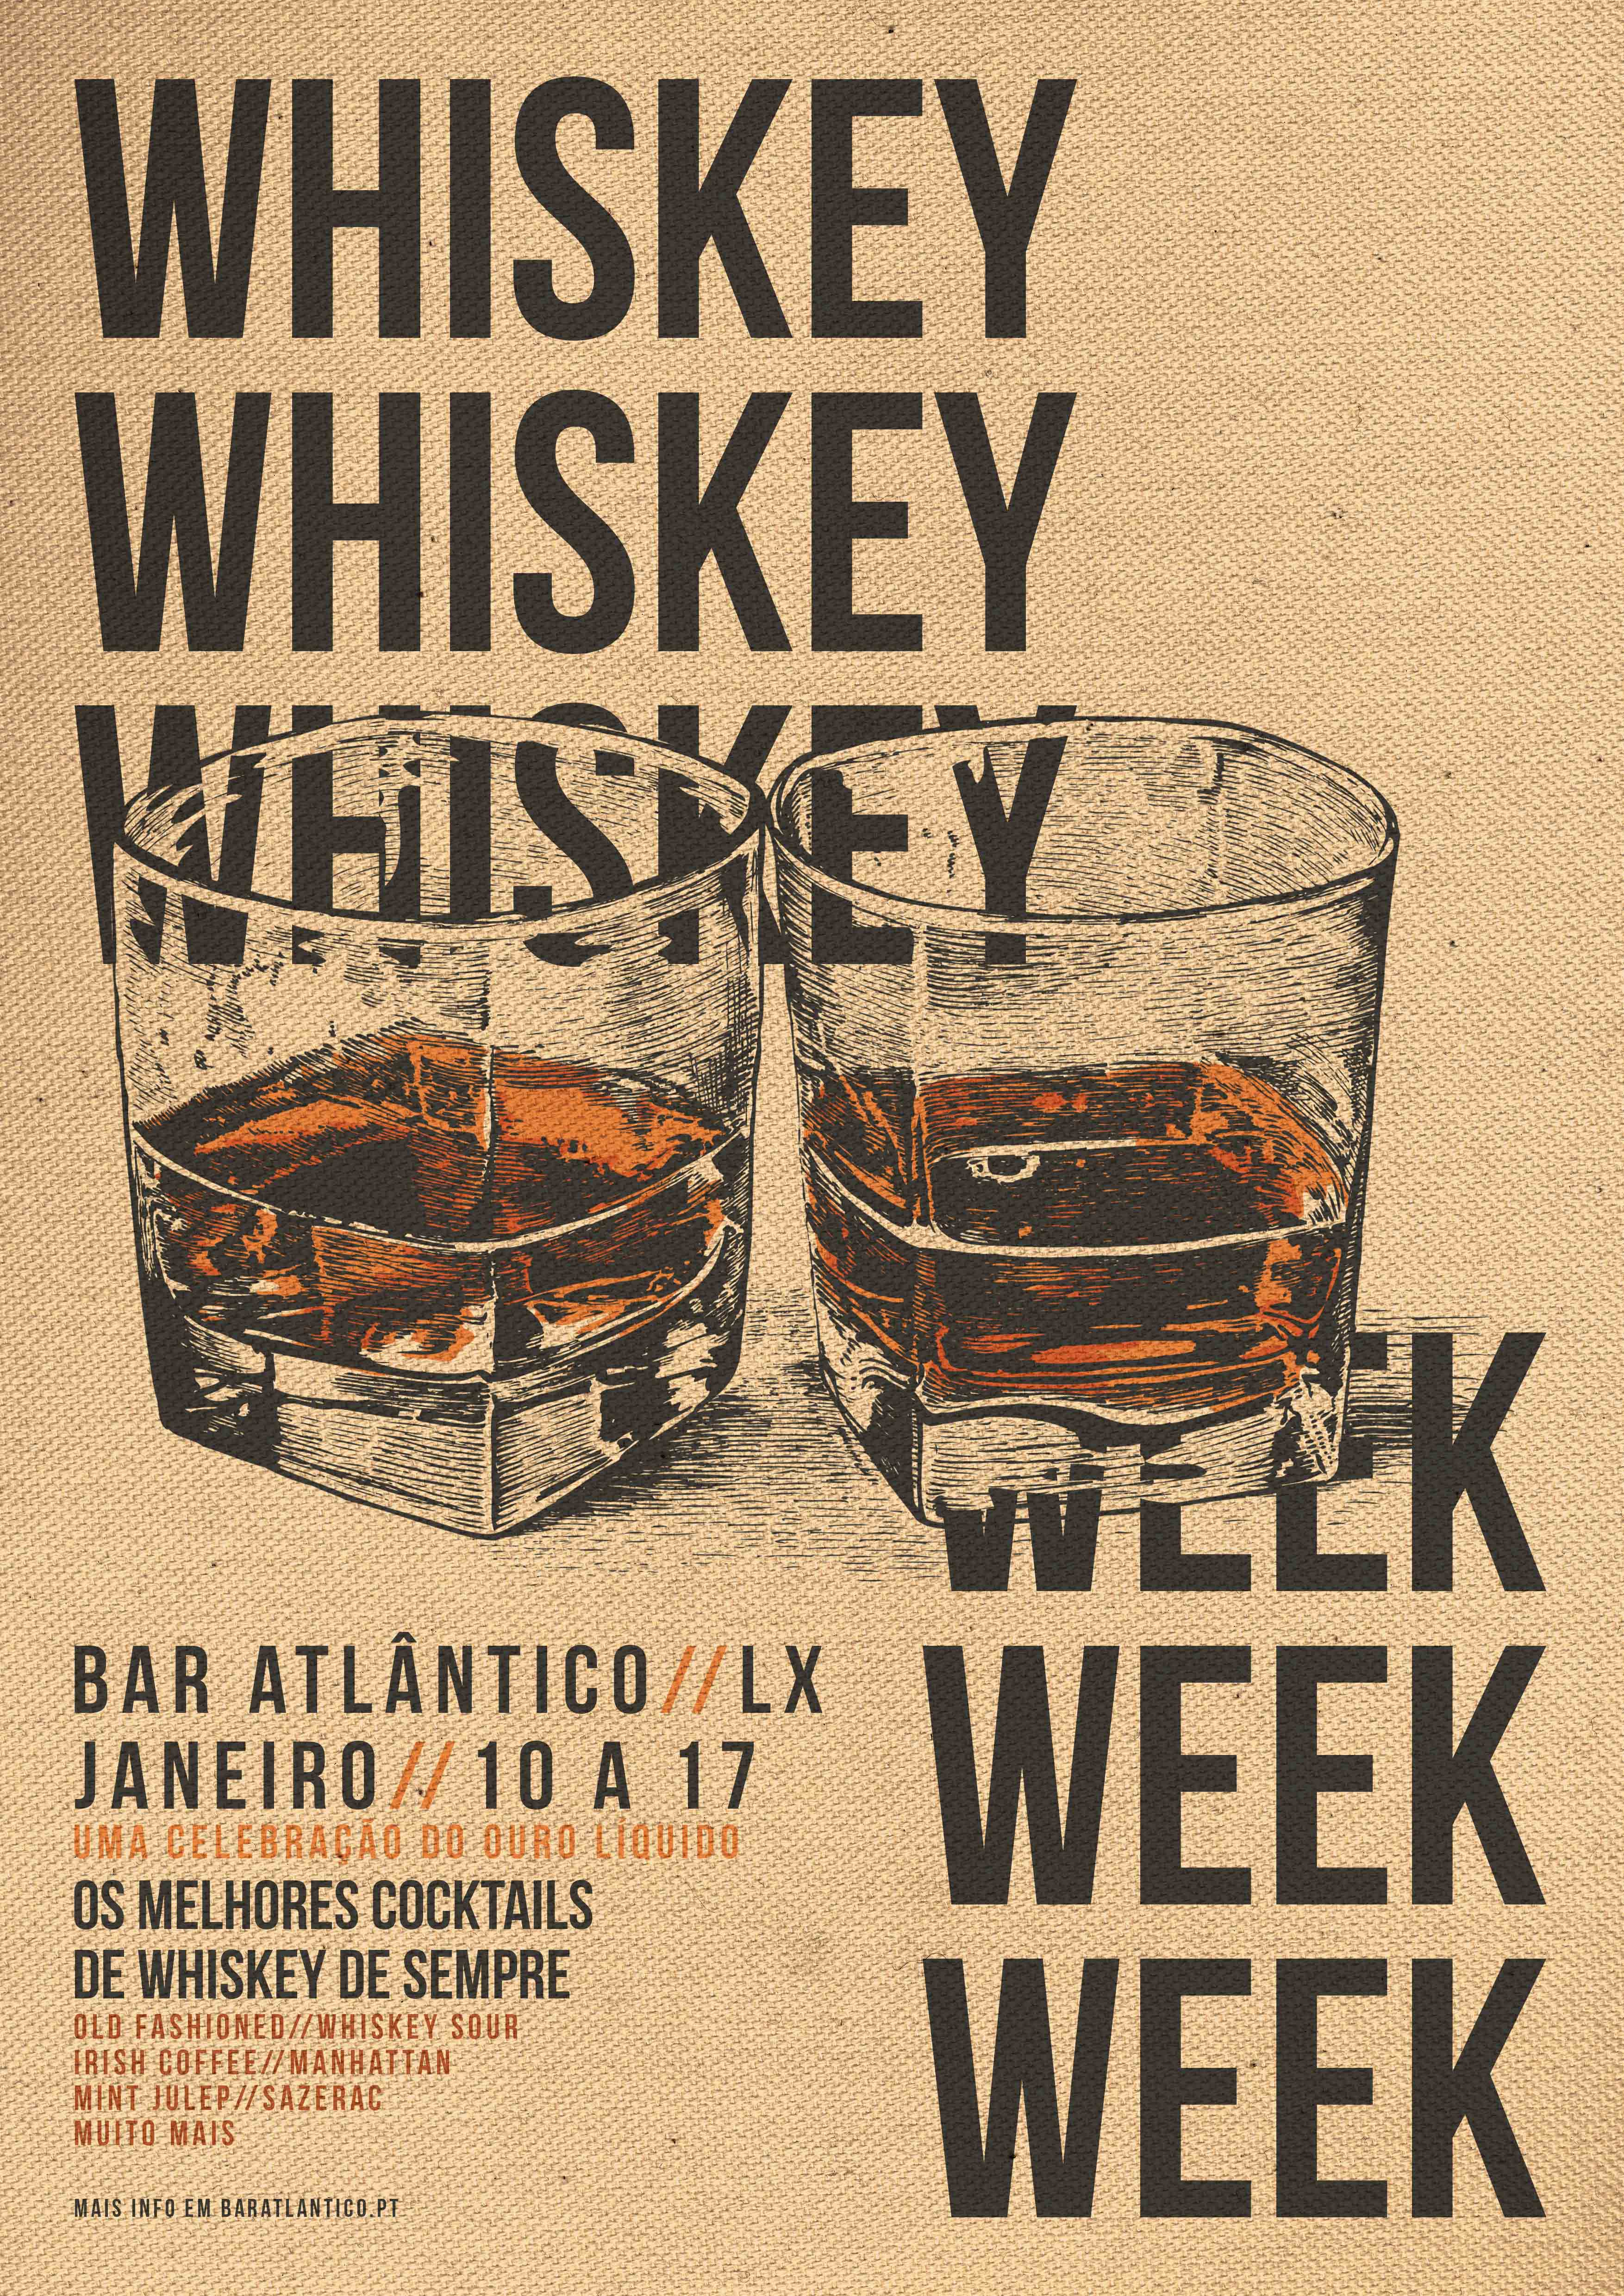 Whiskey Week